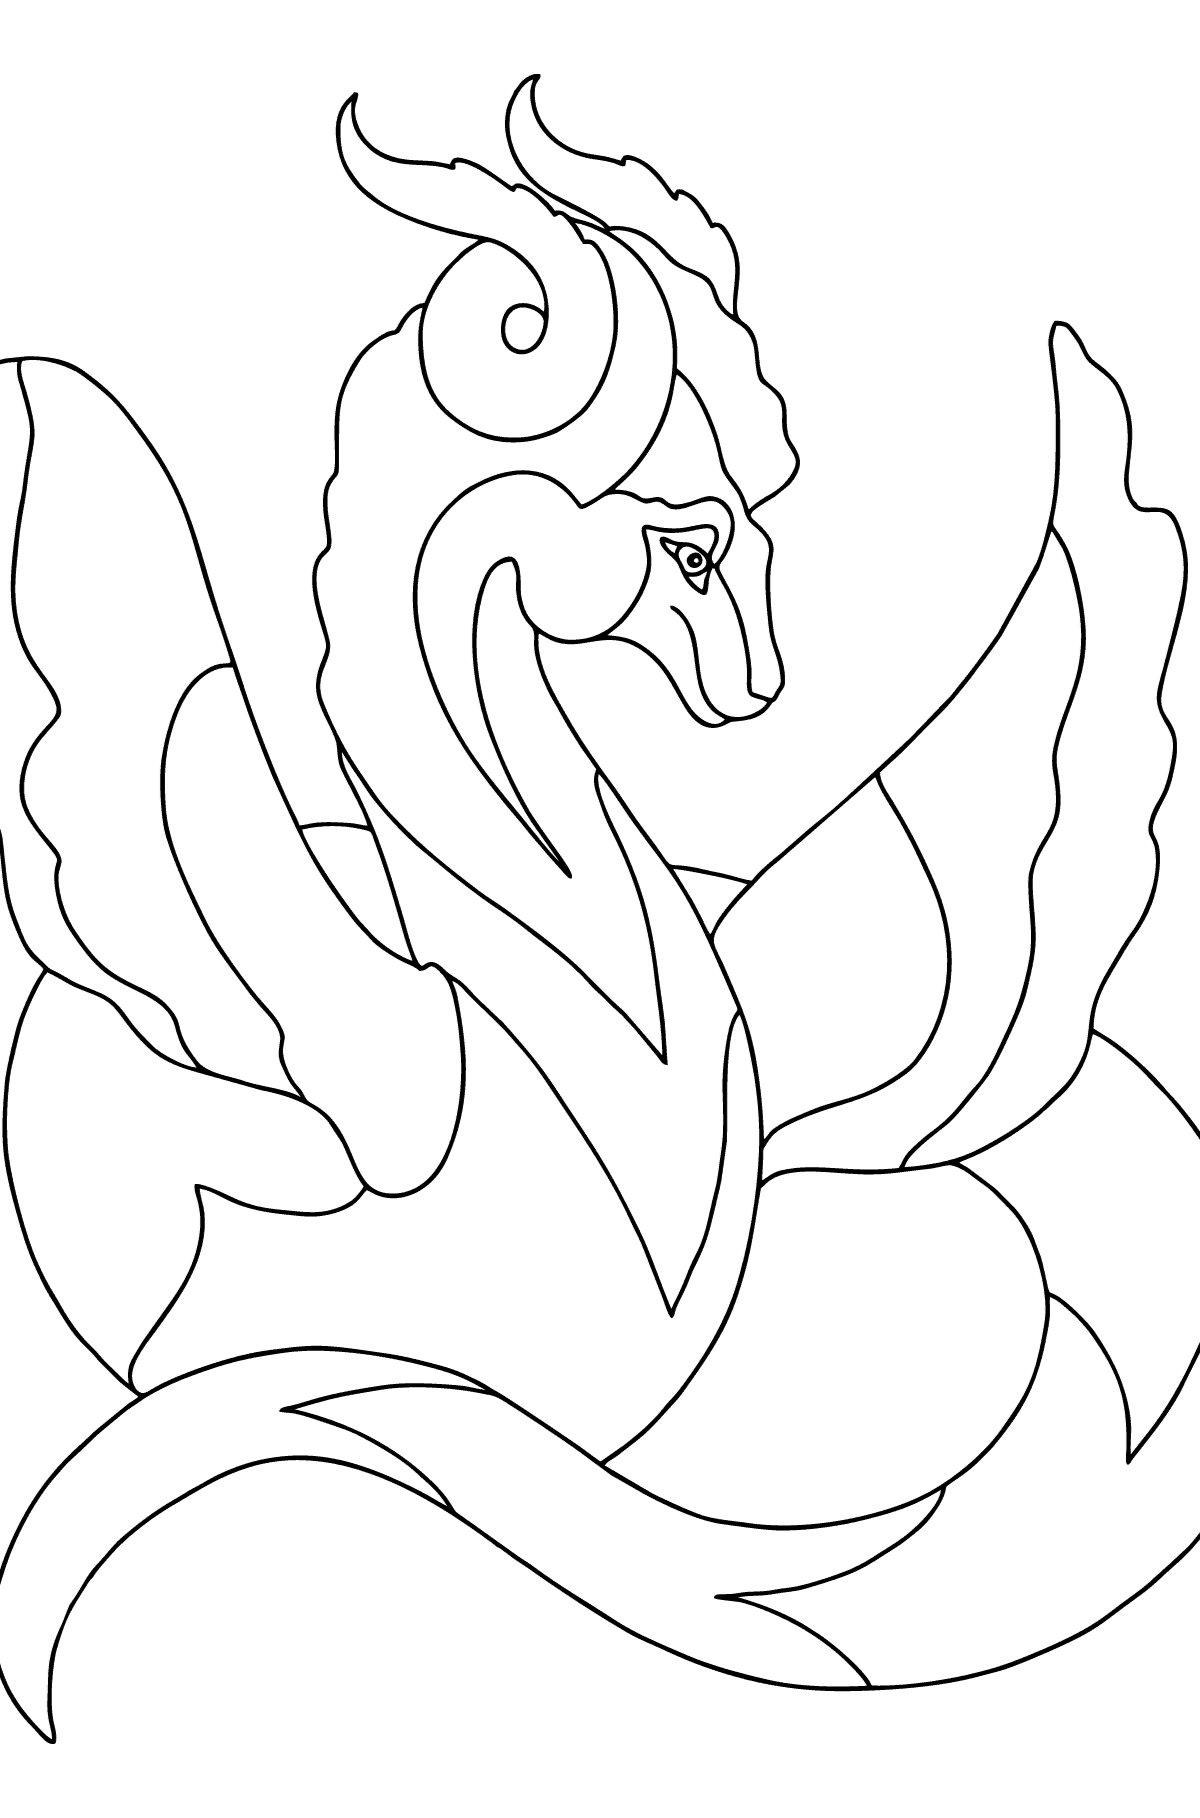 Розмальовка доброго дракона (складно) - Розмальовки для дітей